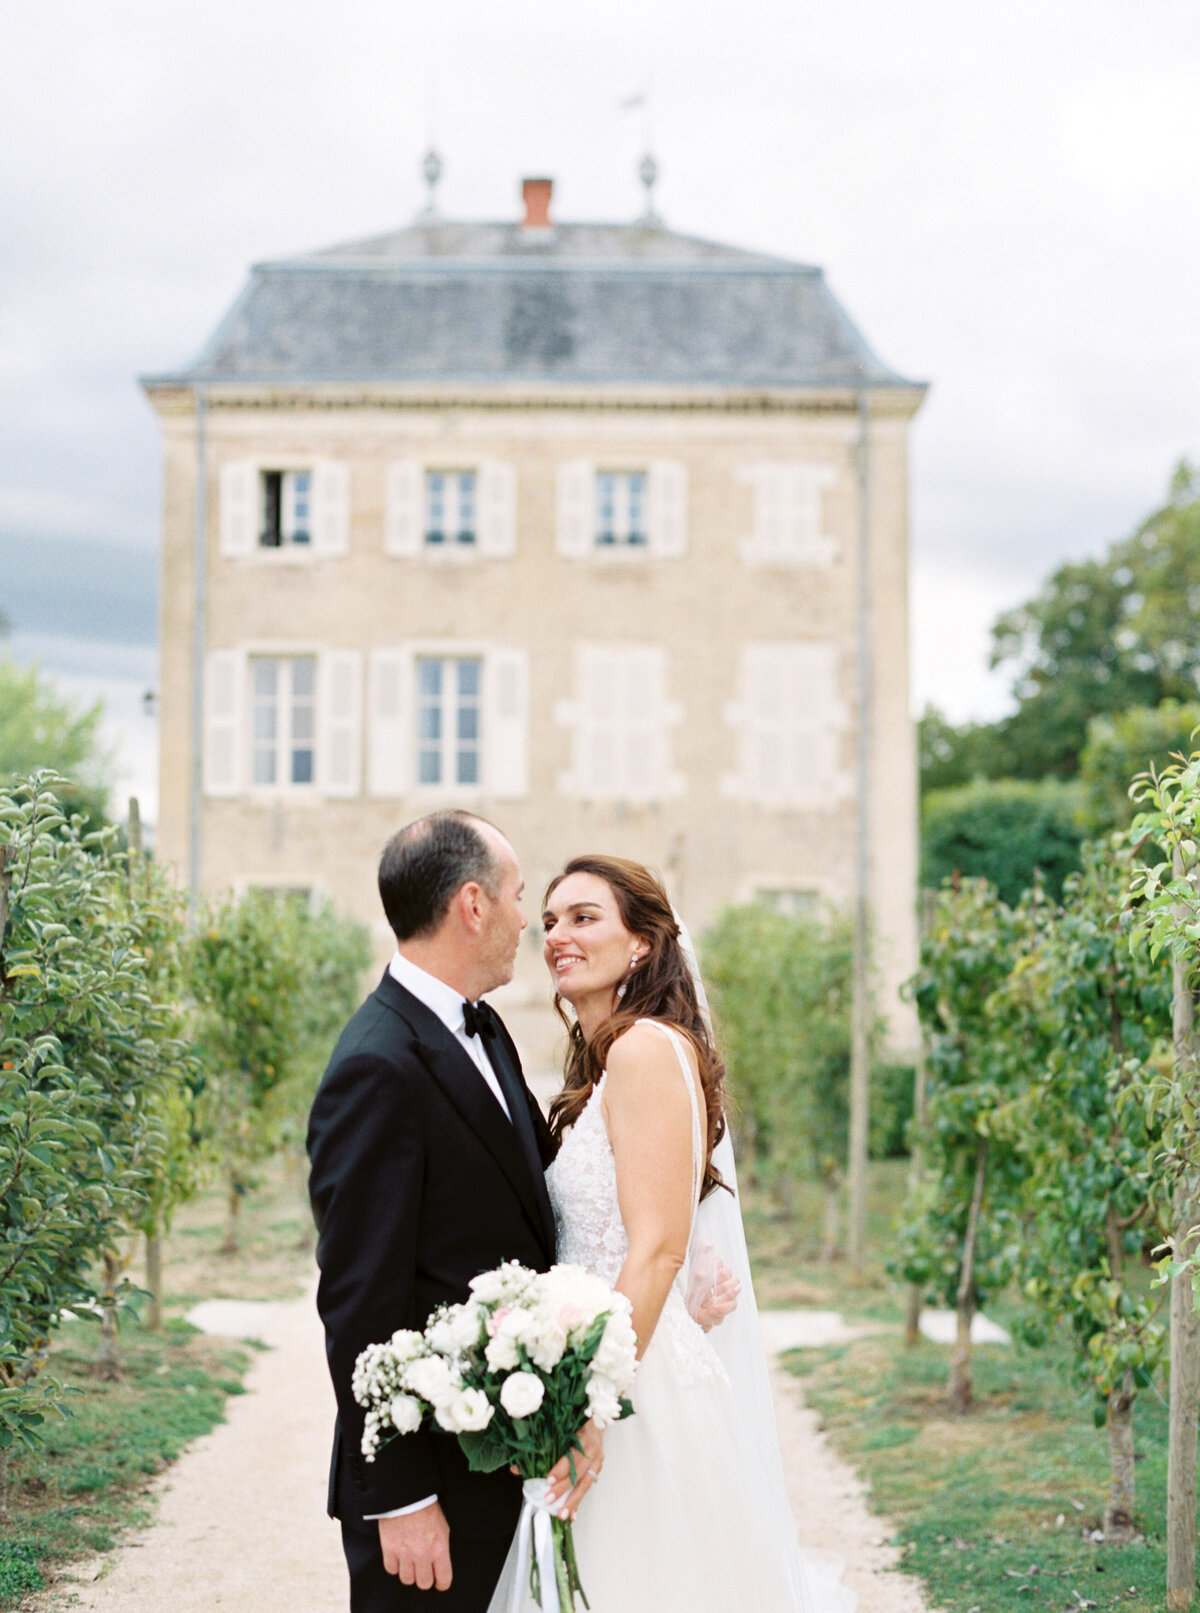 Bride and groom embrace on path outside a chateau